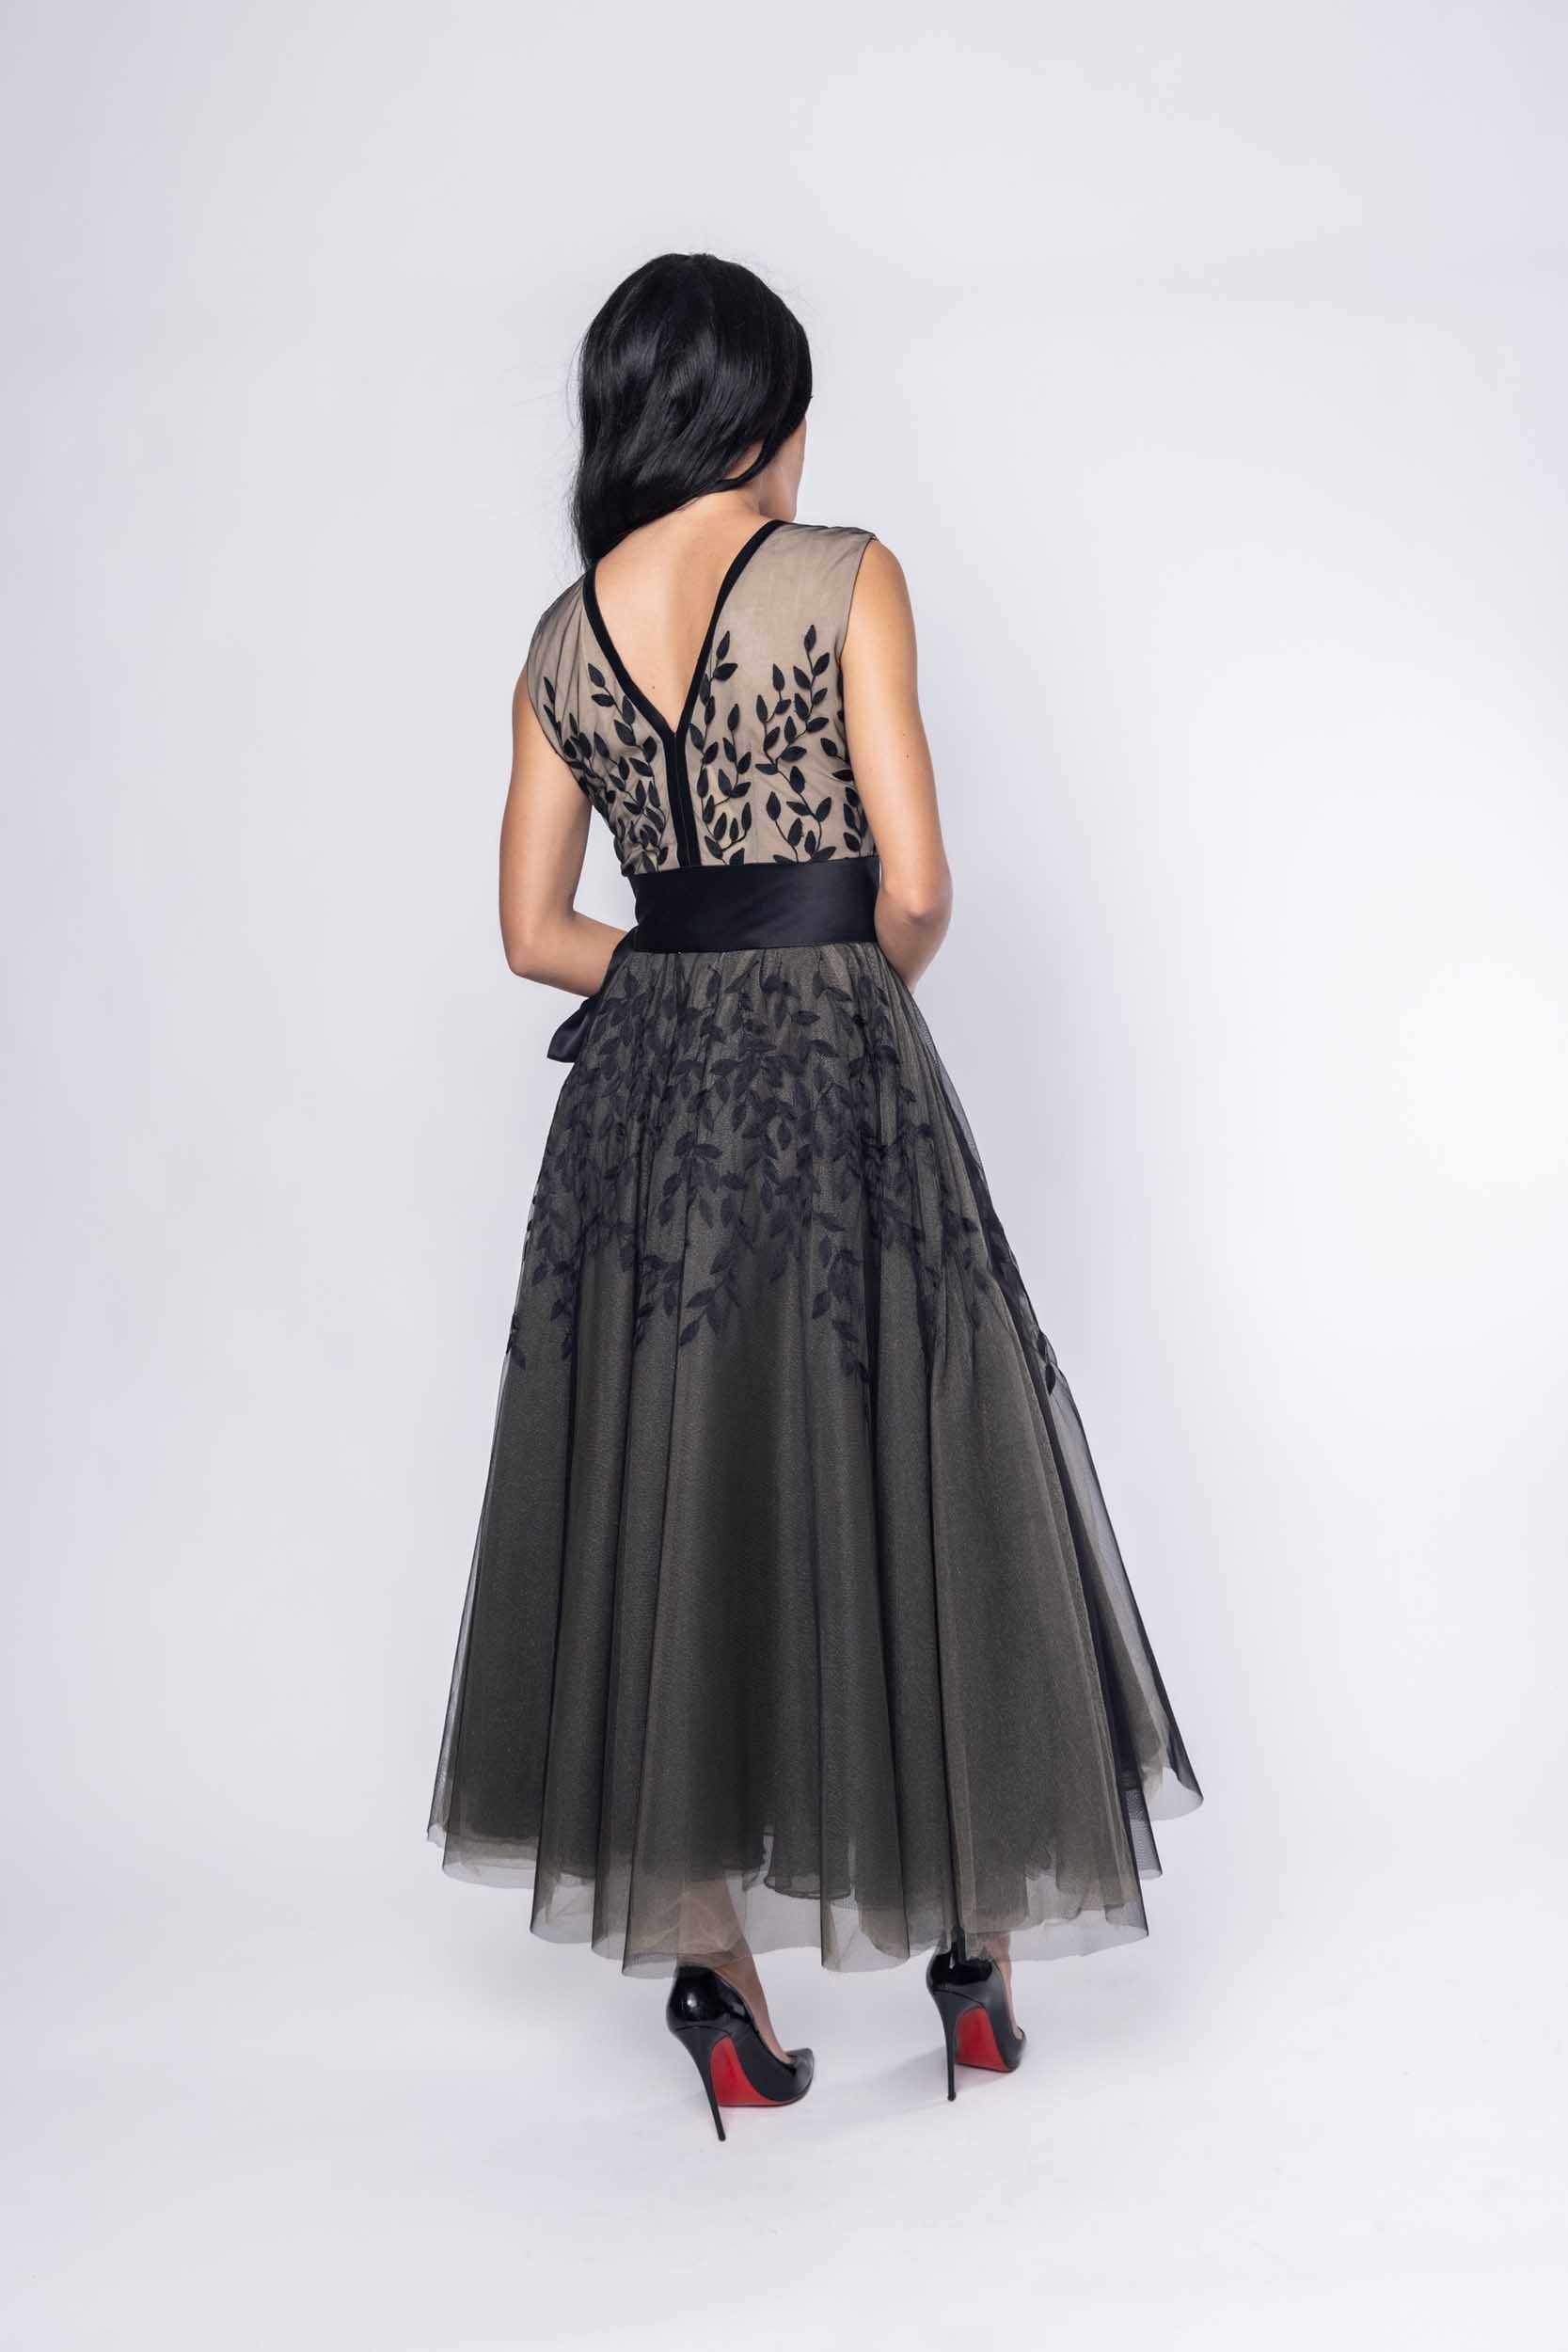 Beautiful model in an ornate black tea-length Sujata Gazder dress - back view